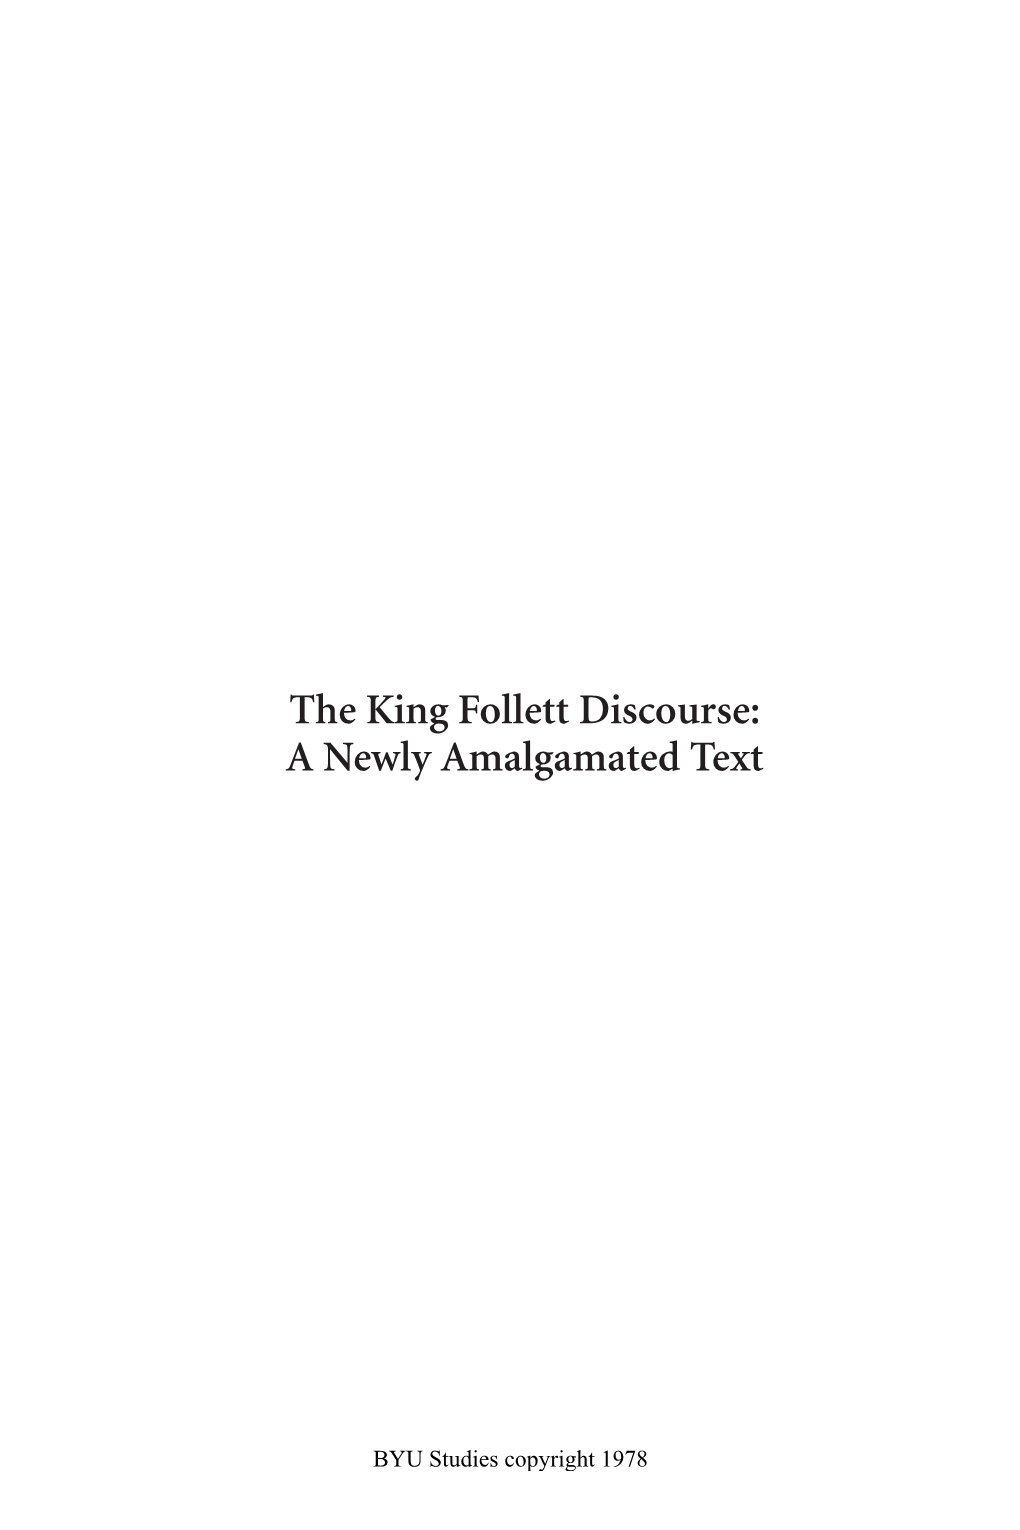 King Follett Discourse: a Newly Amalgamated Text